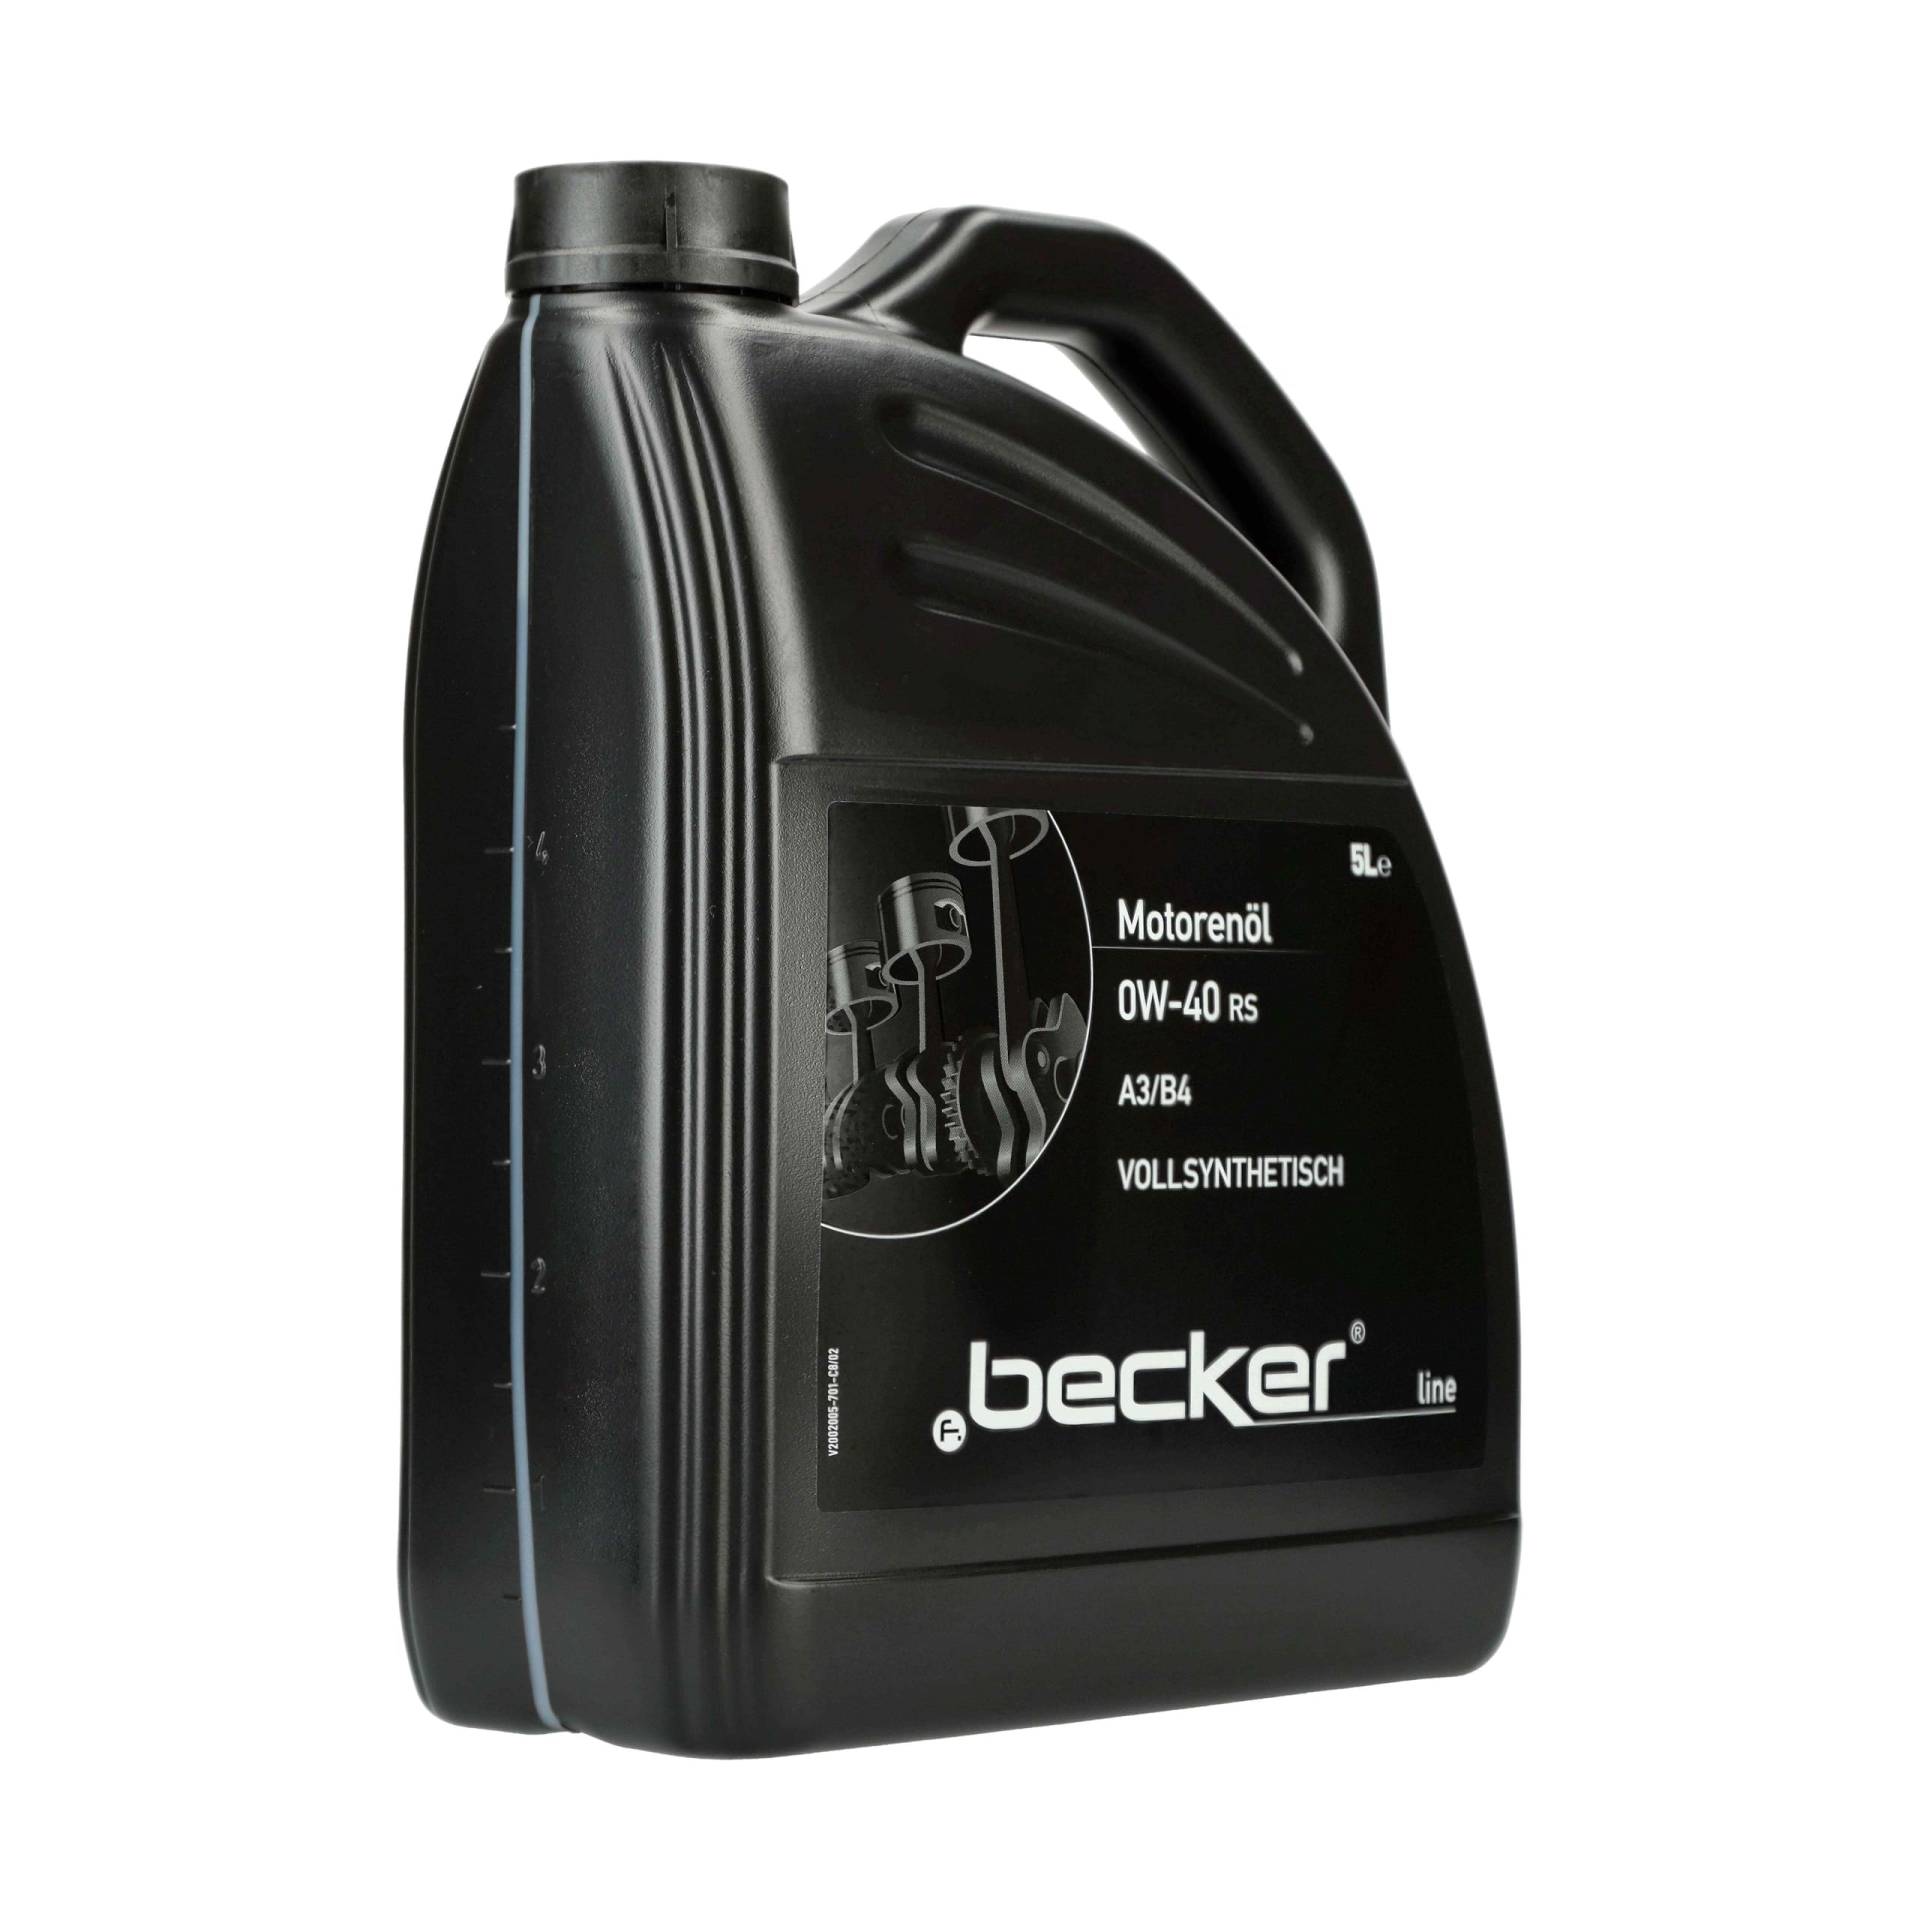 F.BECKER_LINE Motoröl HIGHTEC SYNTH RS SAE 0W-40 Vollsynthetiköl 5 L (80110011) von f.becker_line